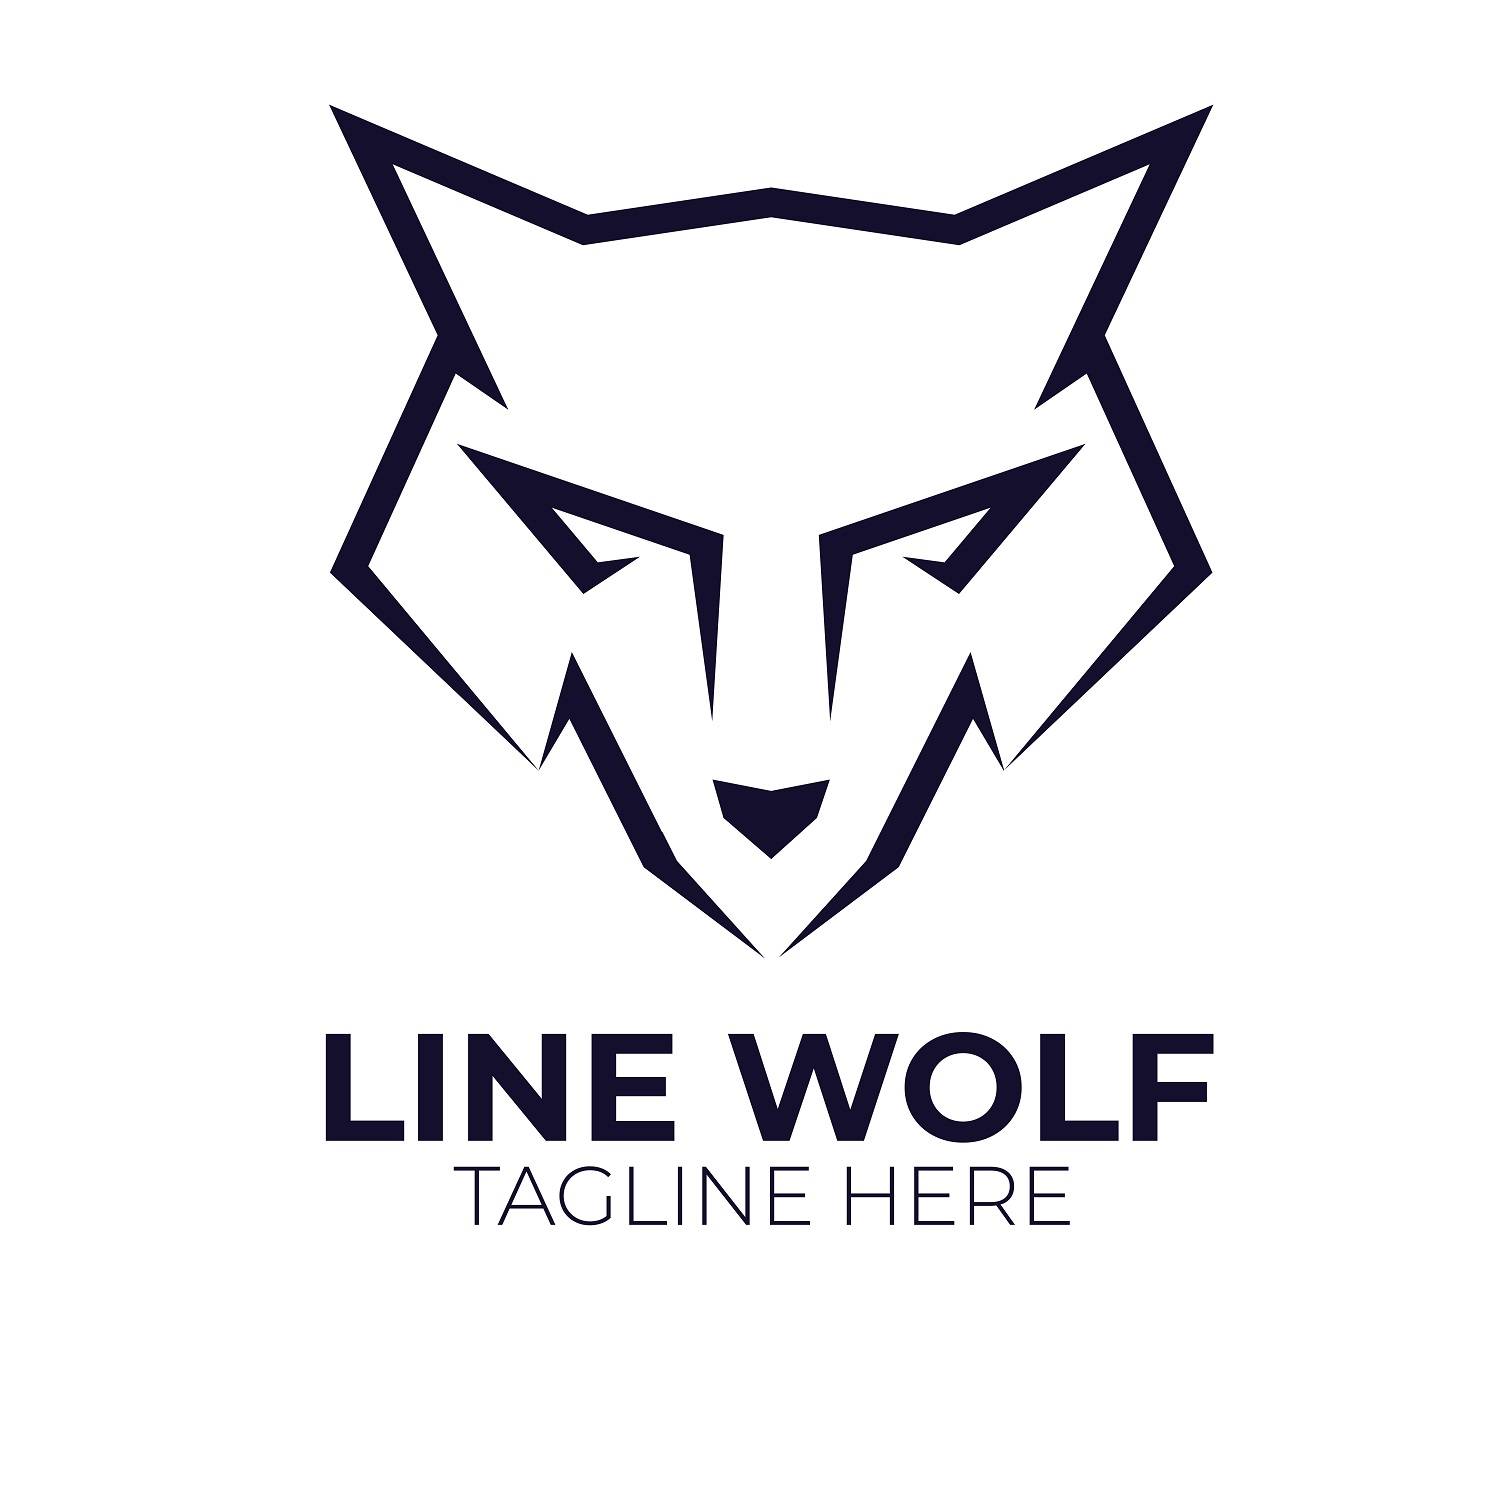 Line wolf face logo design